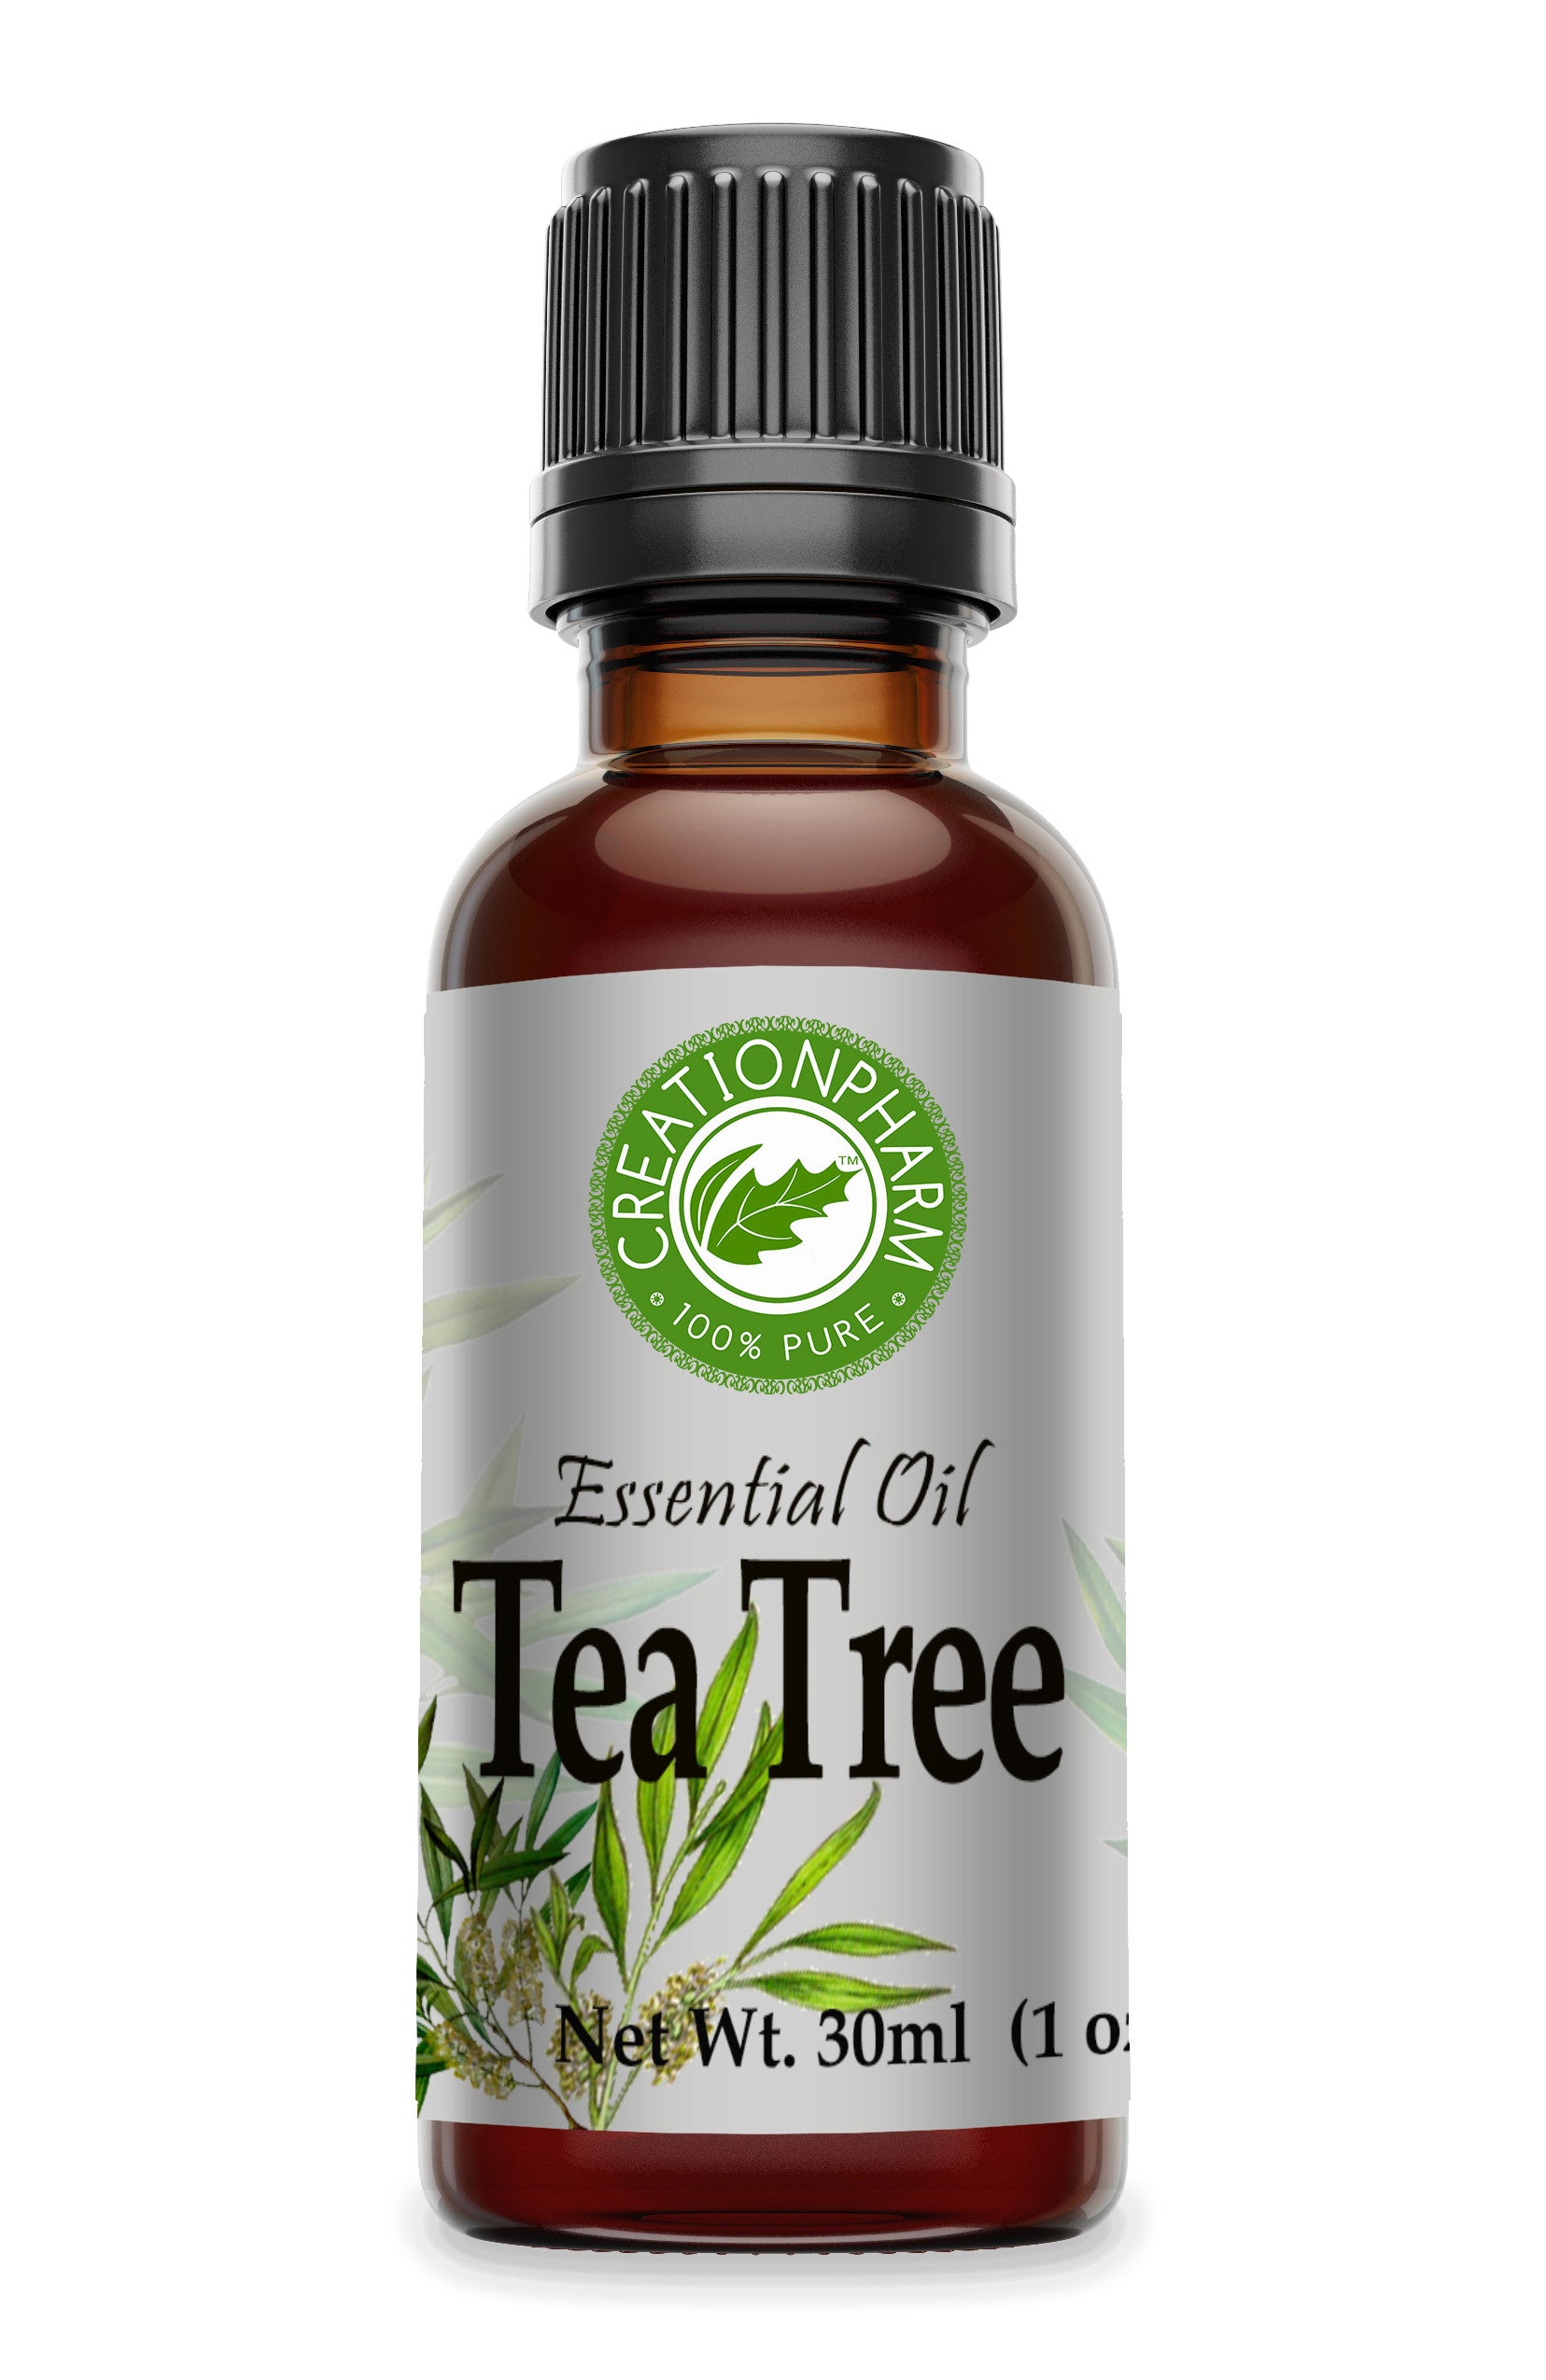 Tea Tree - Hydrolat - Herbes & Traditions - Aromathérapie 